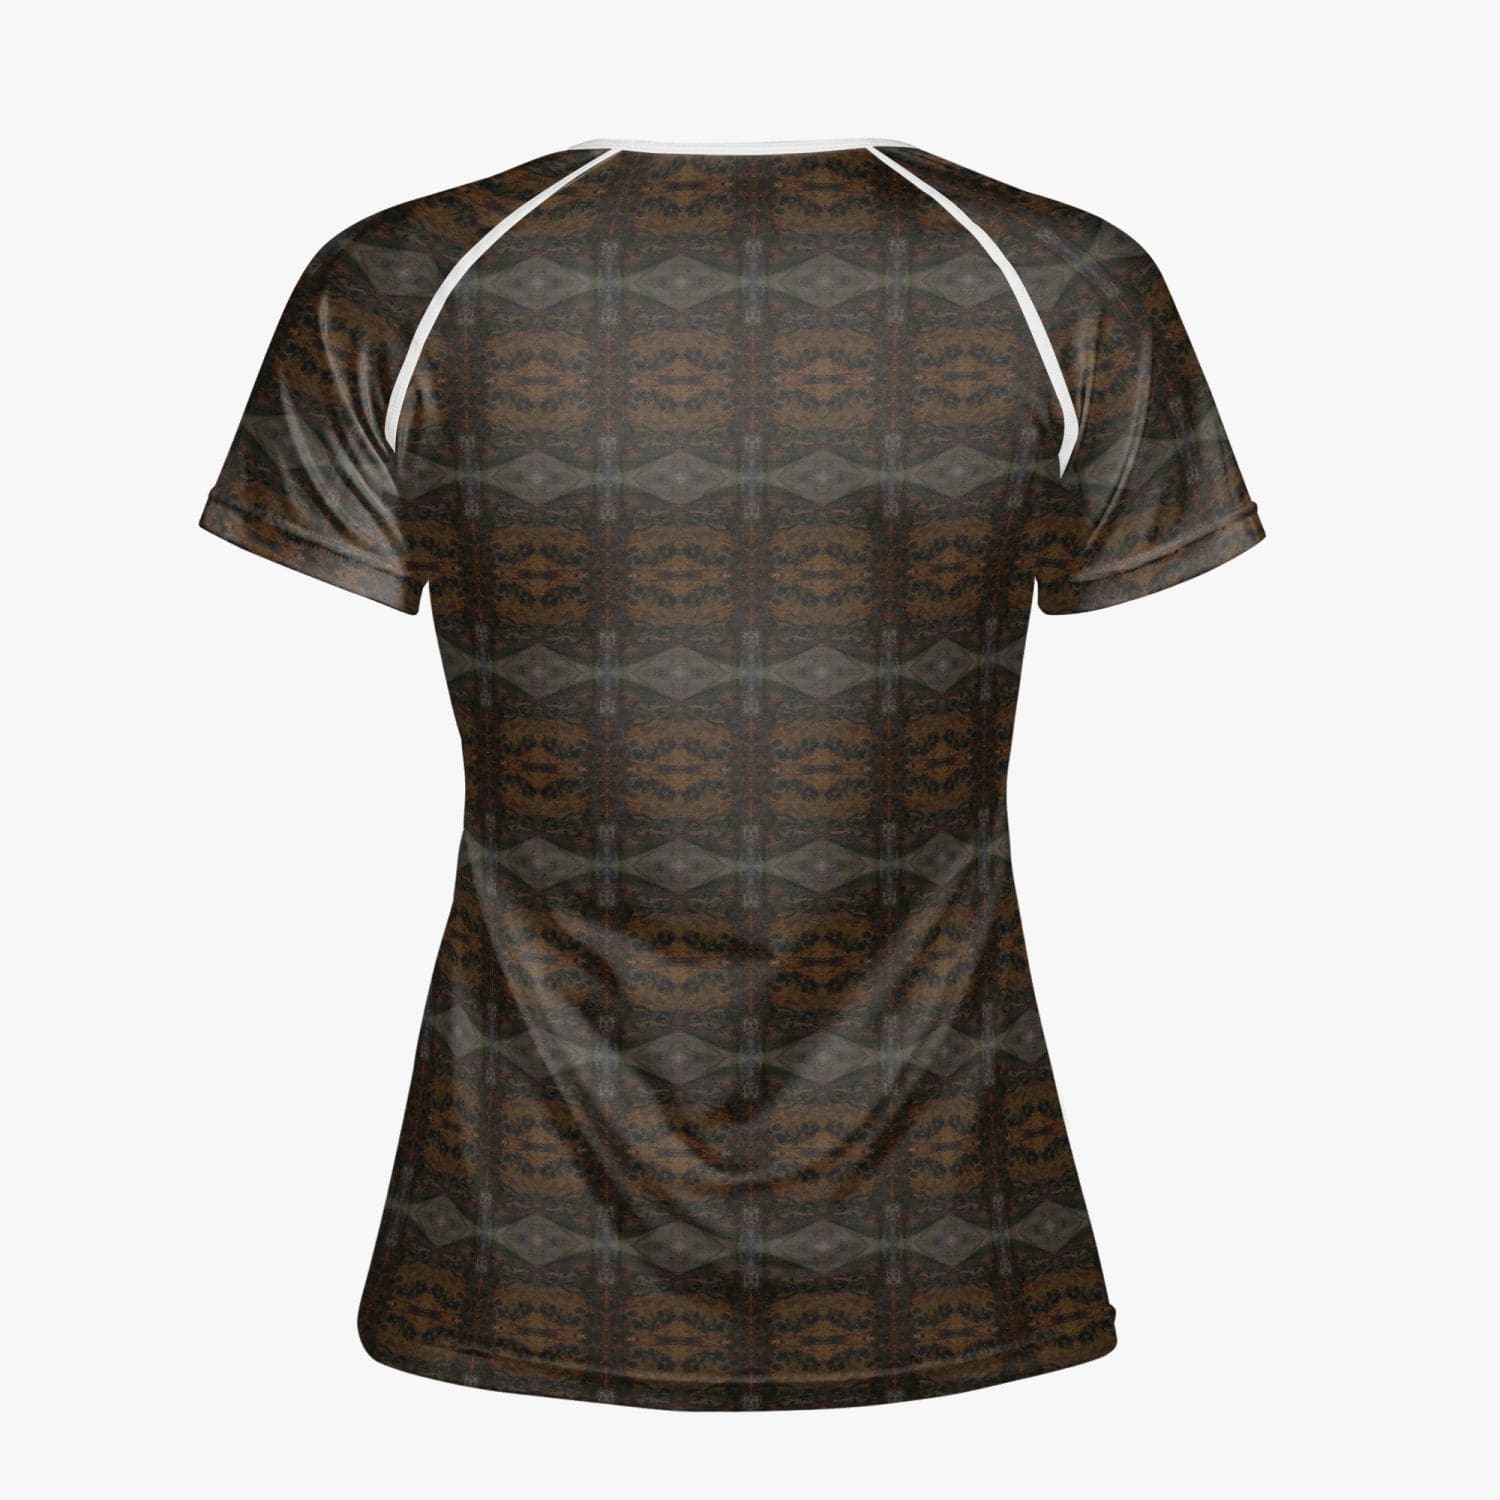 New Beginnings Streetwear  Black Gold and Brown Patterned, Handmade Stylish Women T-shirt Sports/ Yoga Top, by Sensus Studio Design